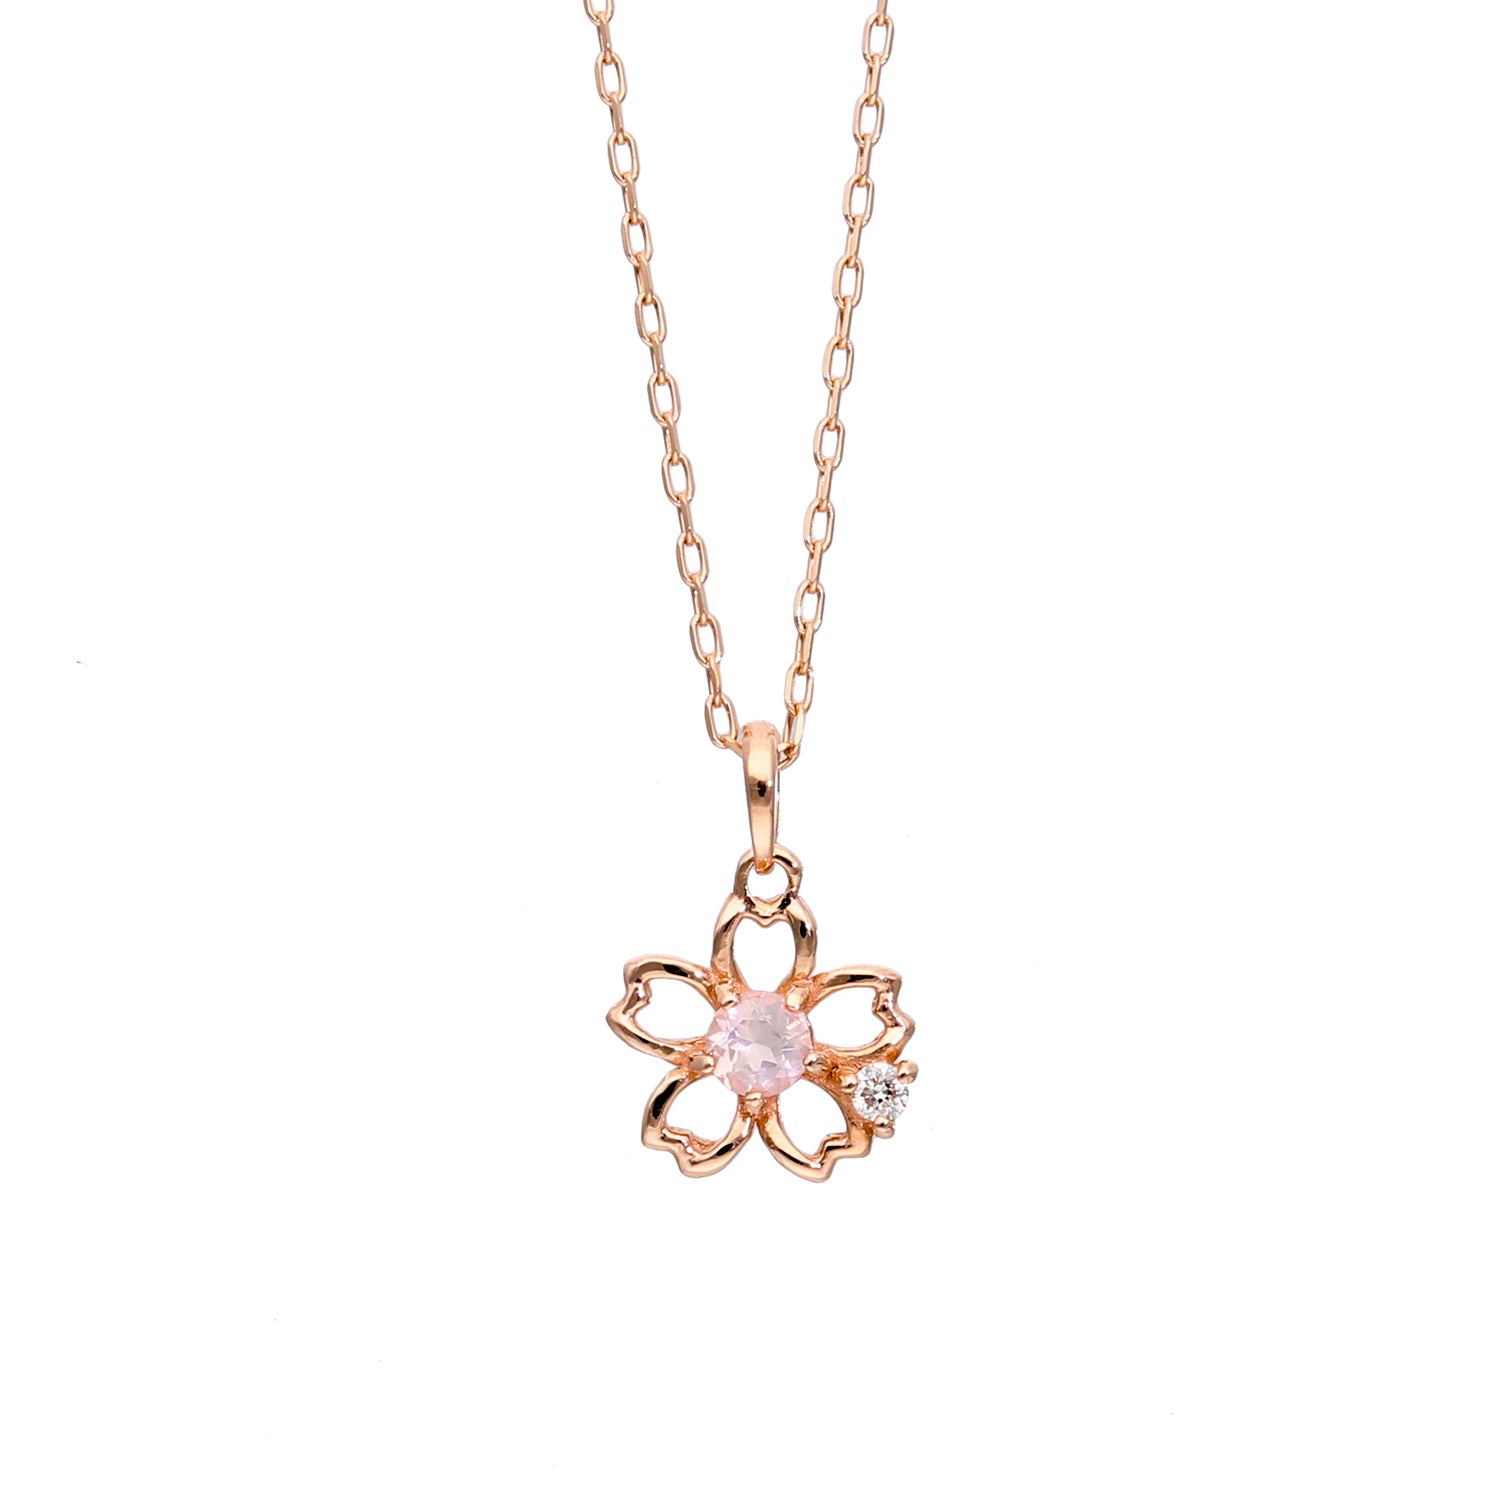 10 Karat Pink Gold Color Stone Sakura Necklace｜60-9409-9413